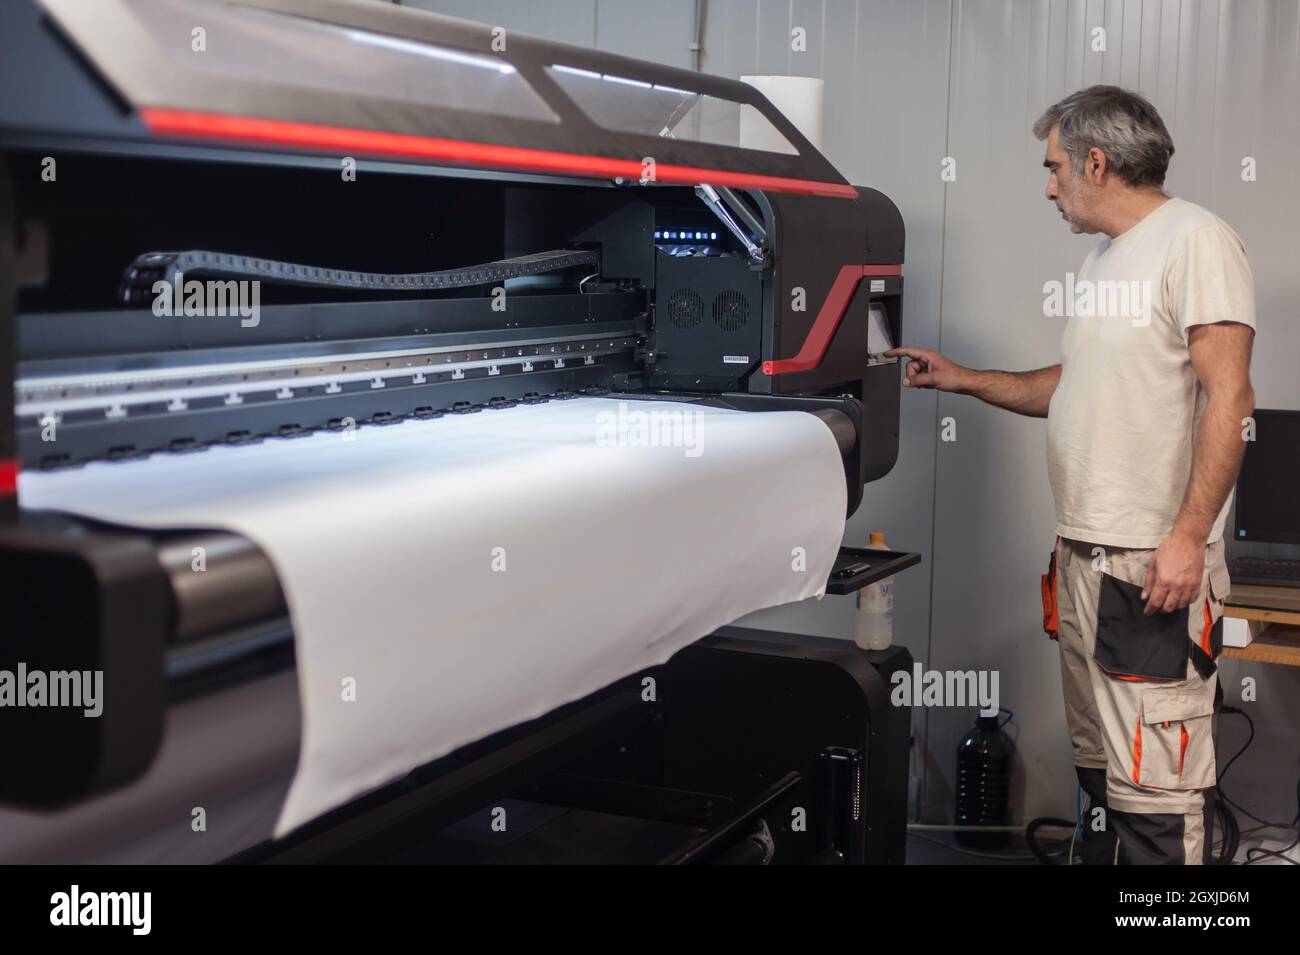 Technician worker operator works on large premium industrial printer ...